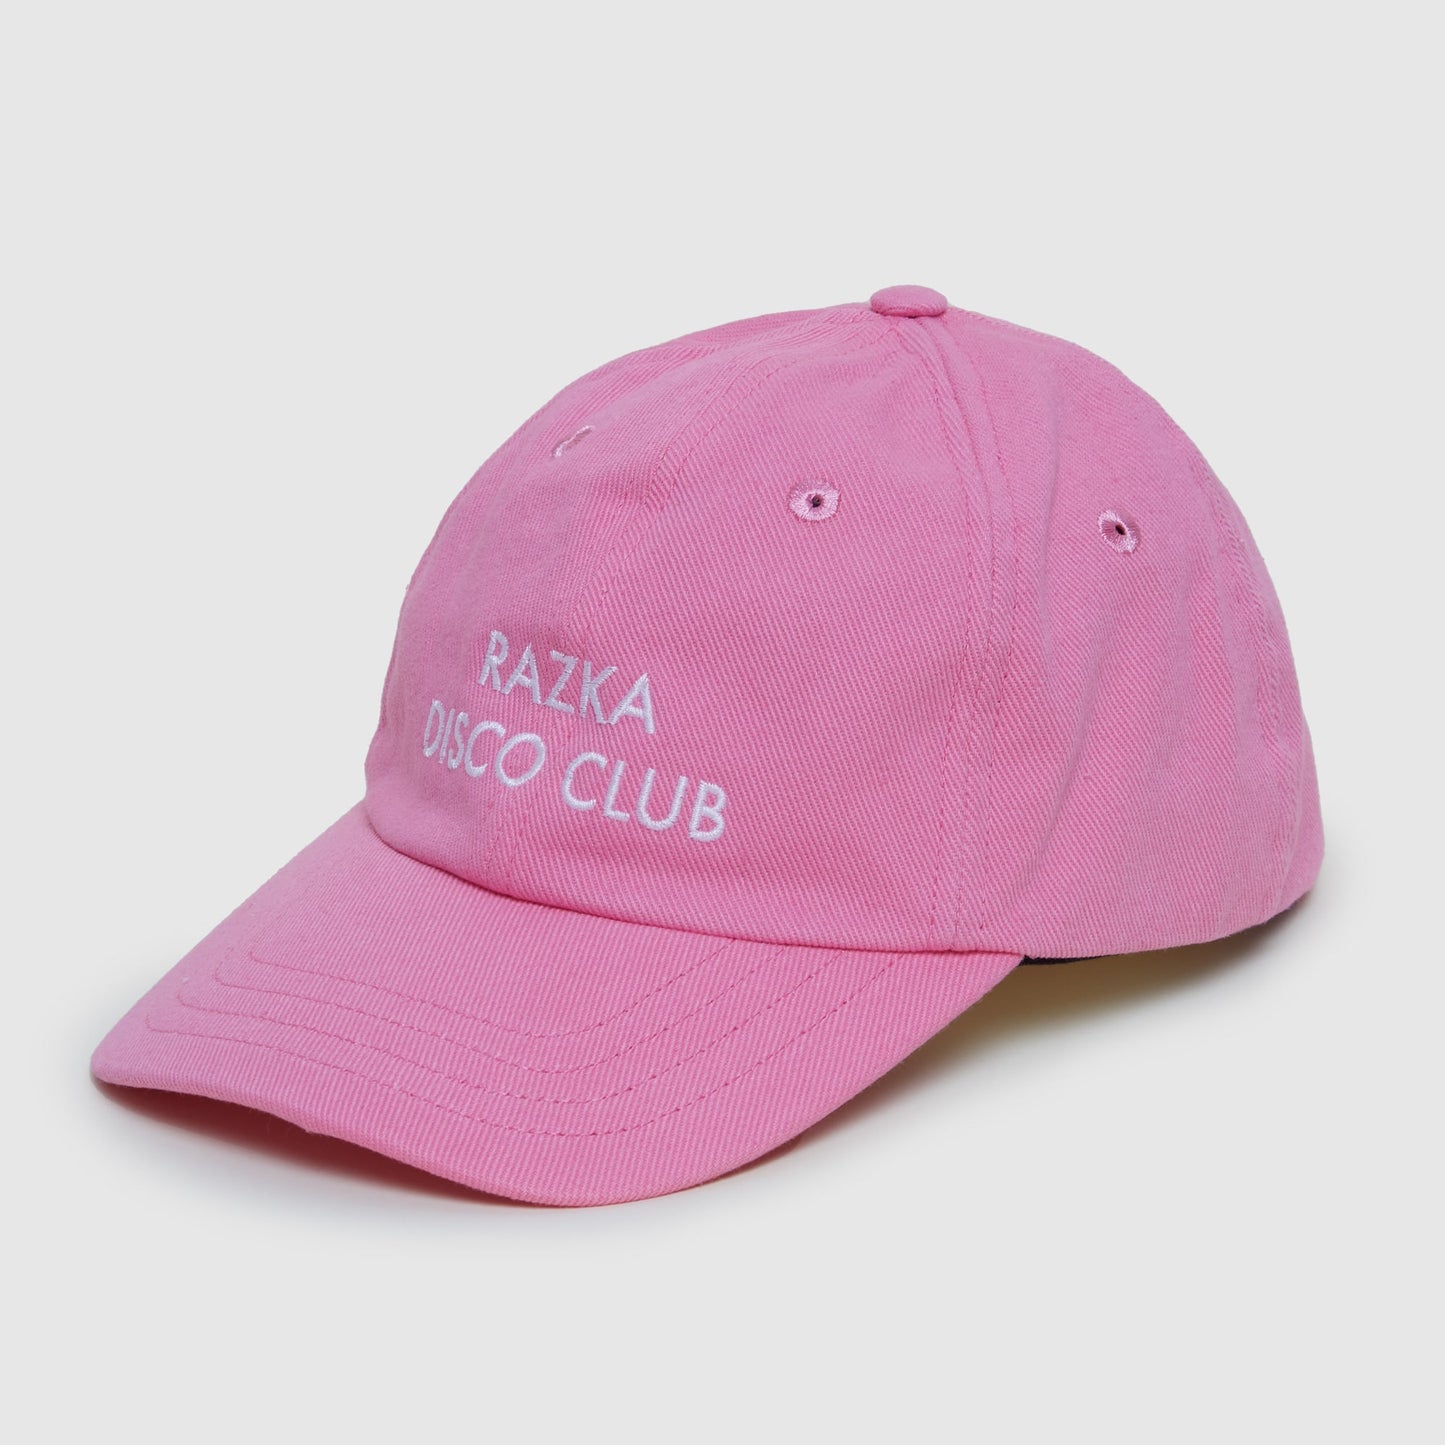 The pink cap